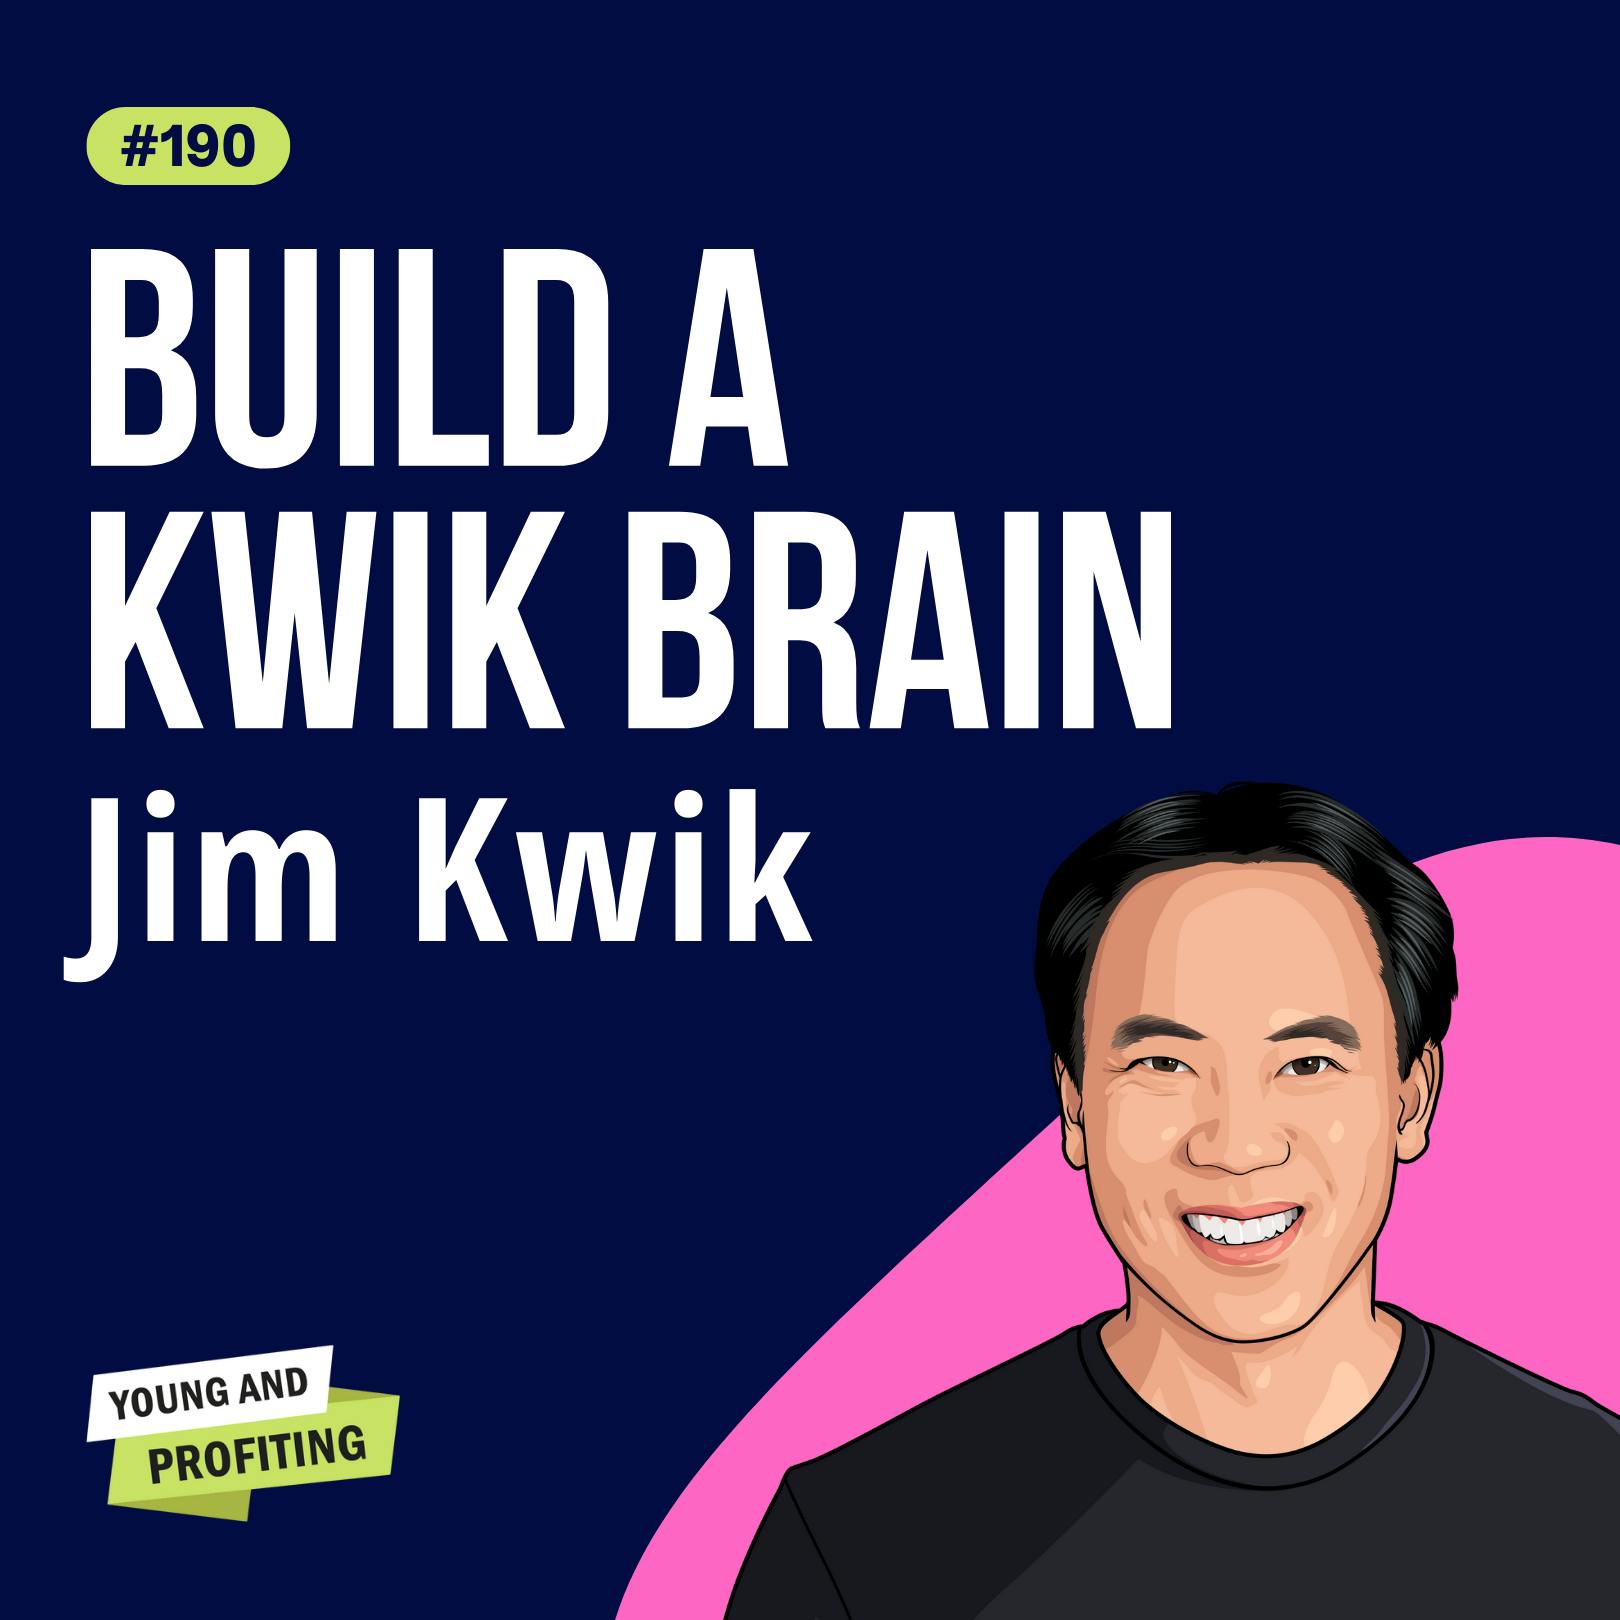 Jim Kwik: From Broken Brain To Kwik Brain - Learn Faster and Improve Your Memory | E190